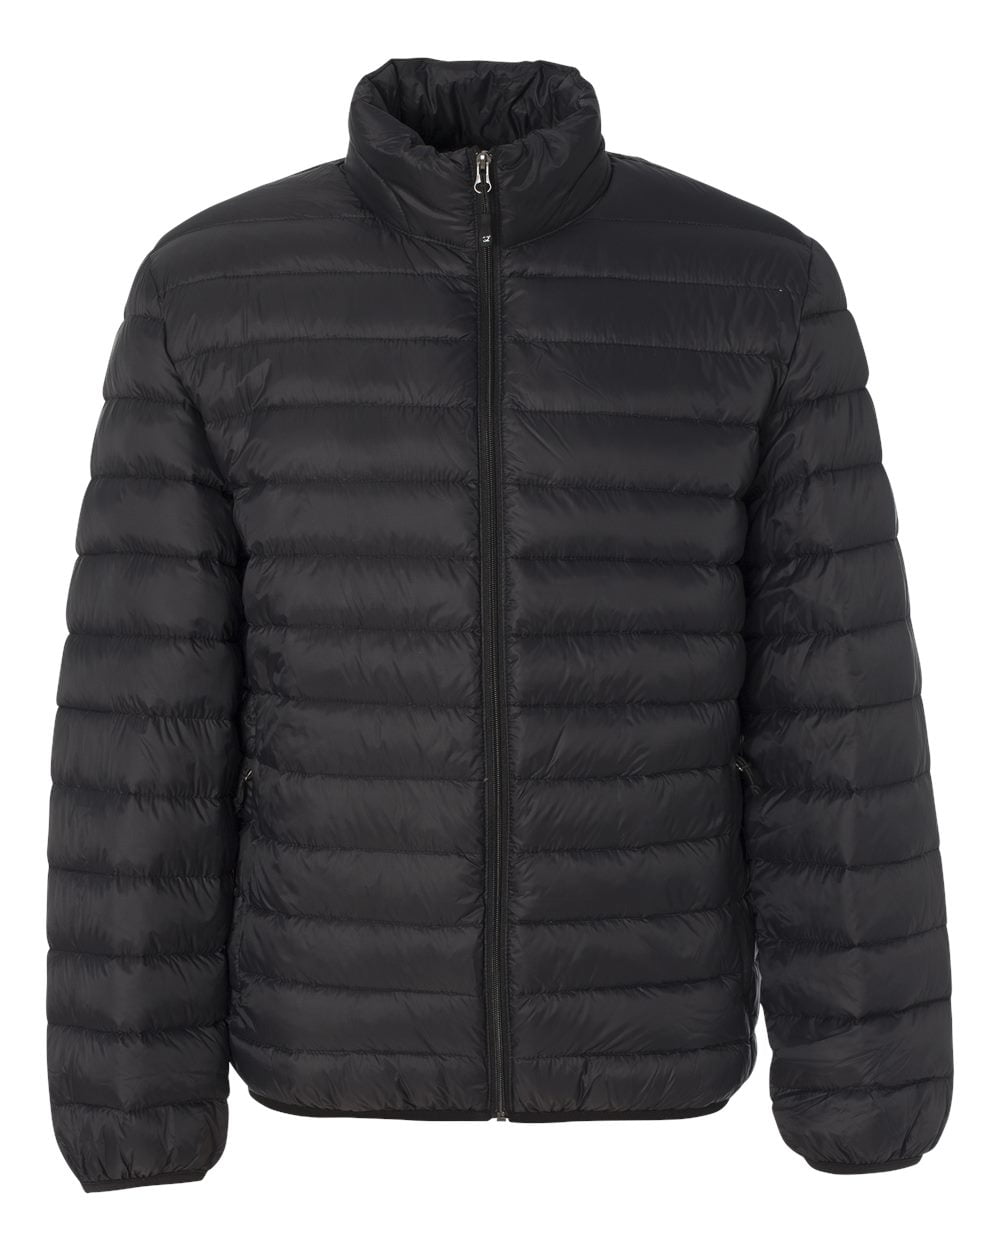 Weatherproof - 32 Degrees Packable Down Jacket - 15600 - Black - Size: 3XL  